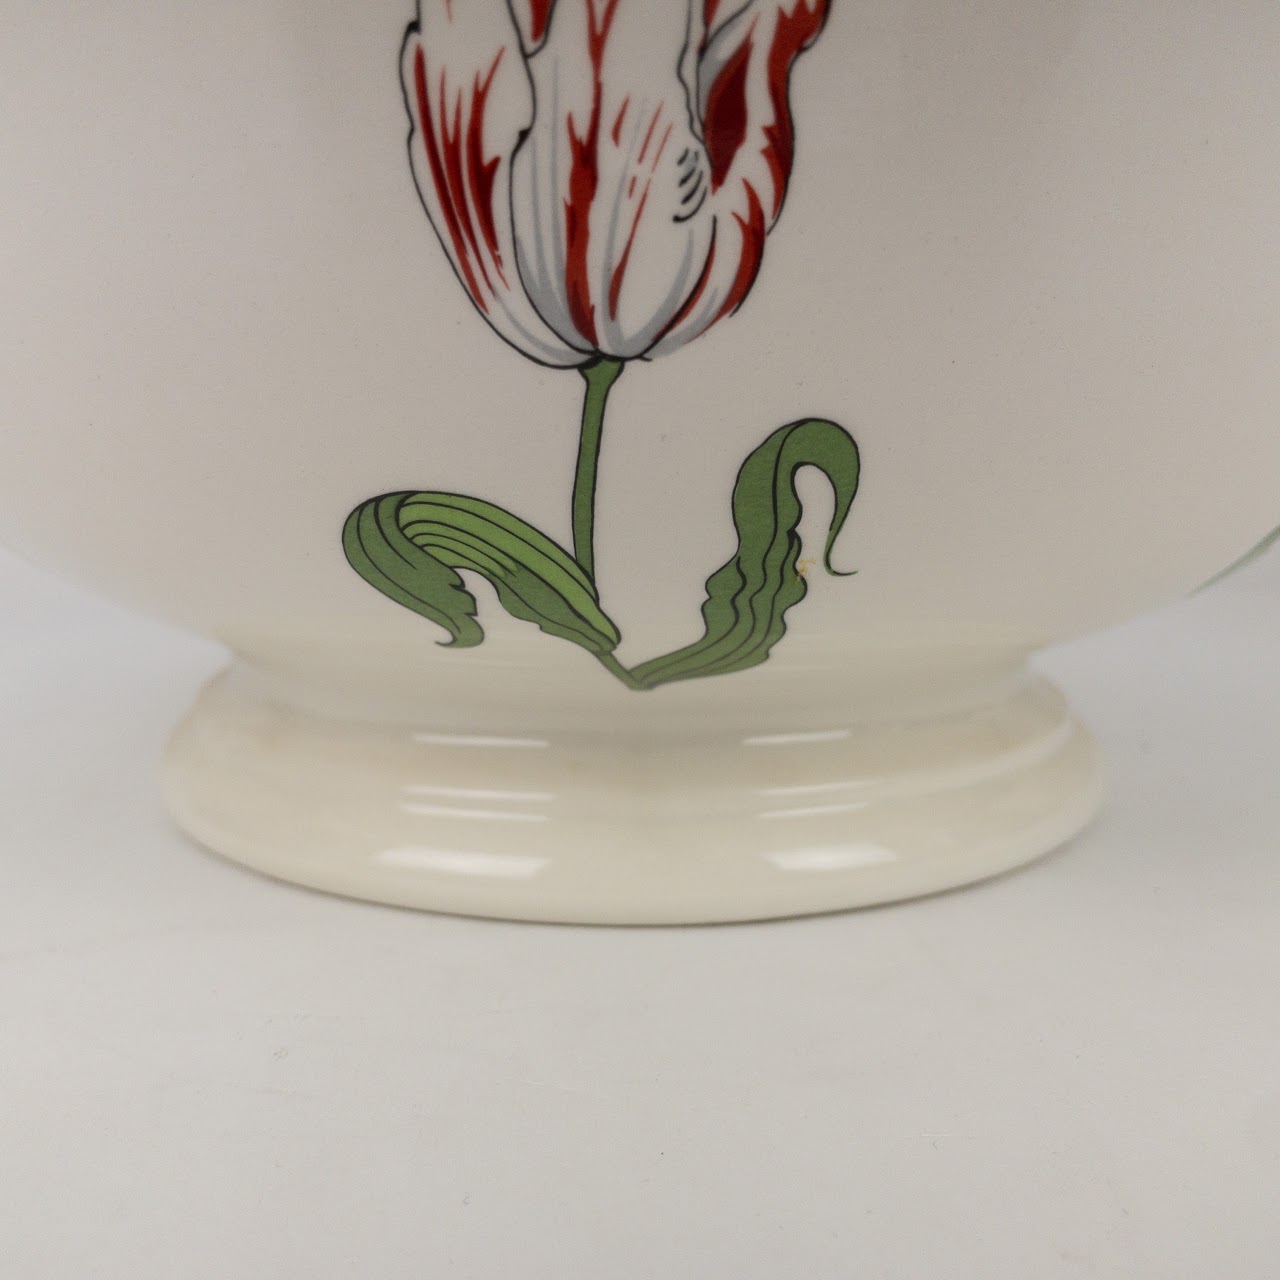 Tiffany & Co. Tiffany Tulips Pedestal Bowl